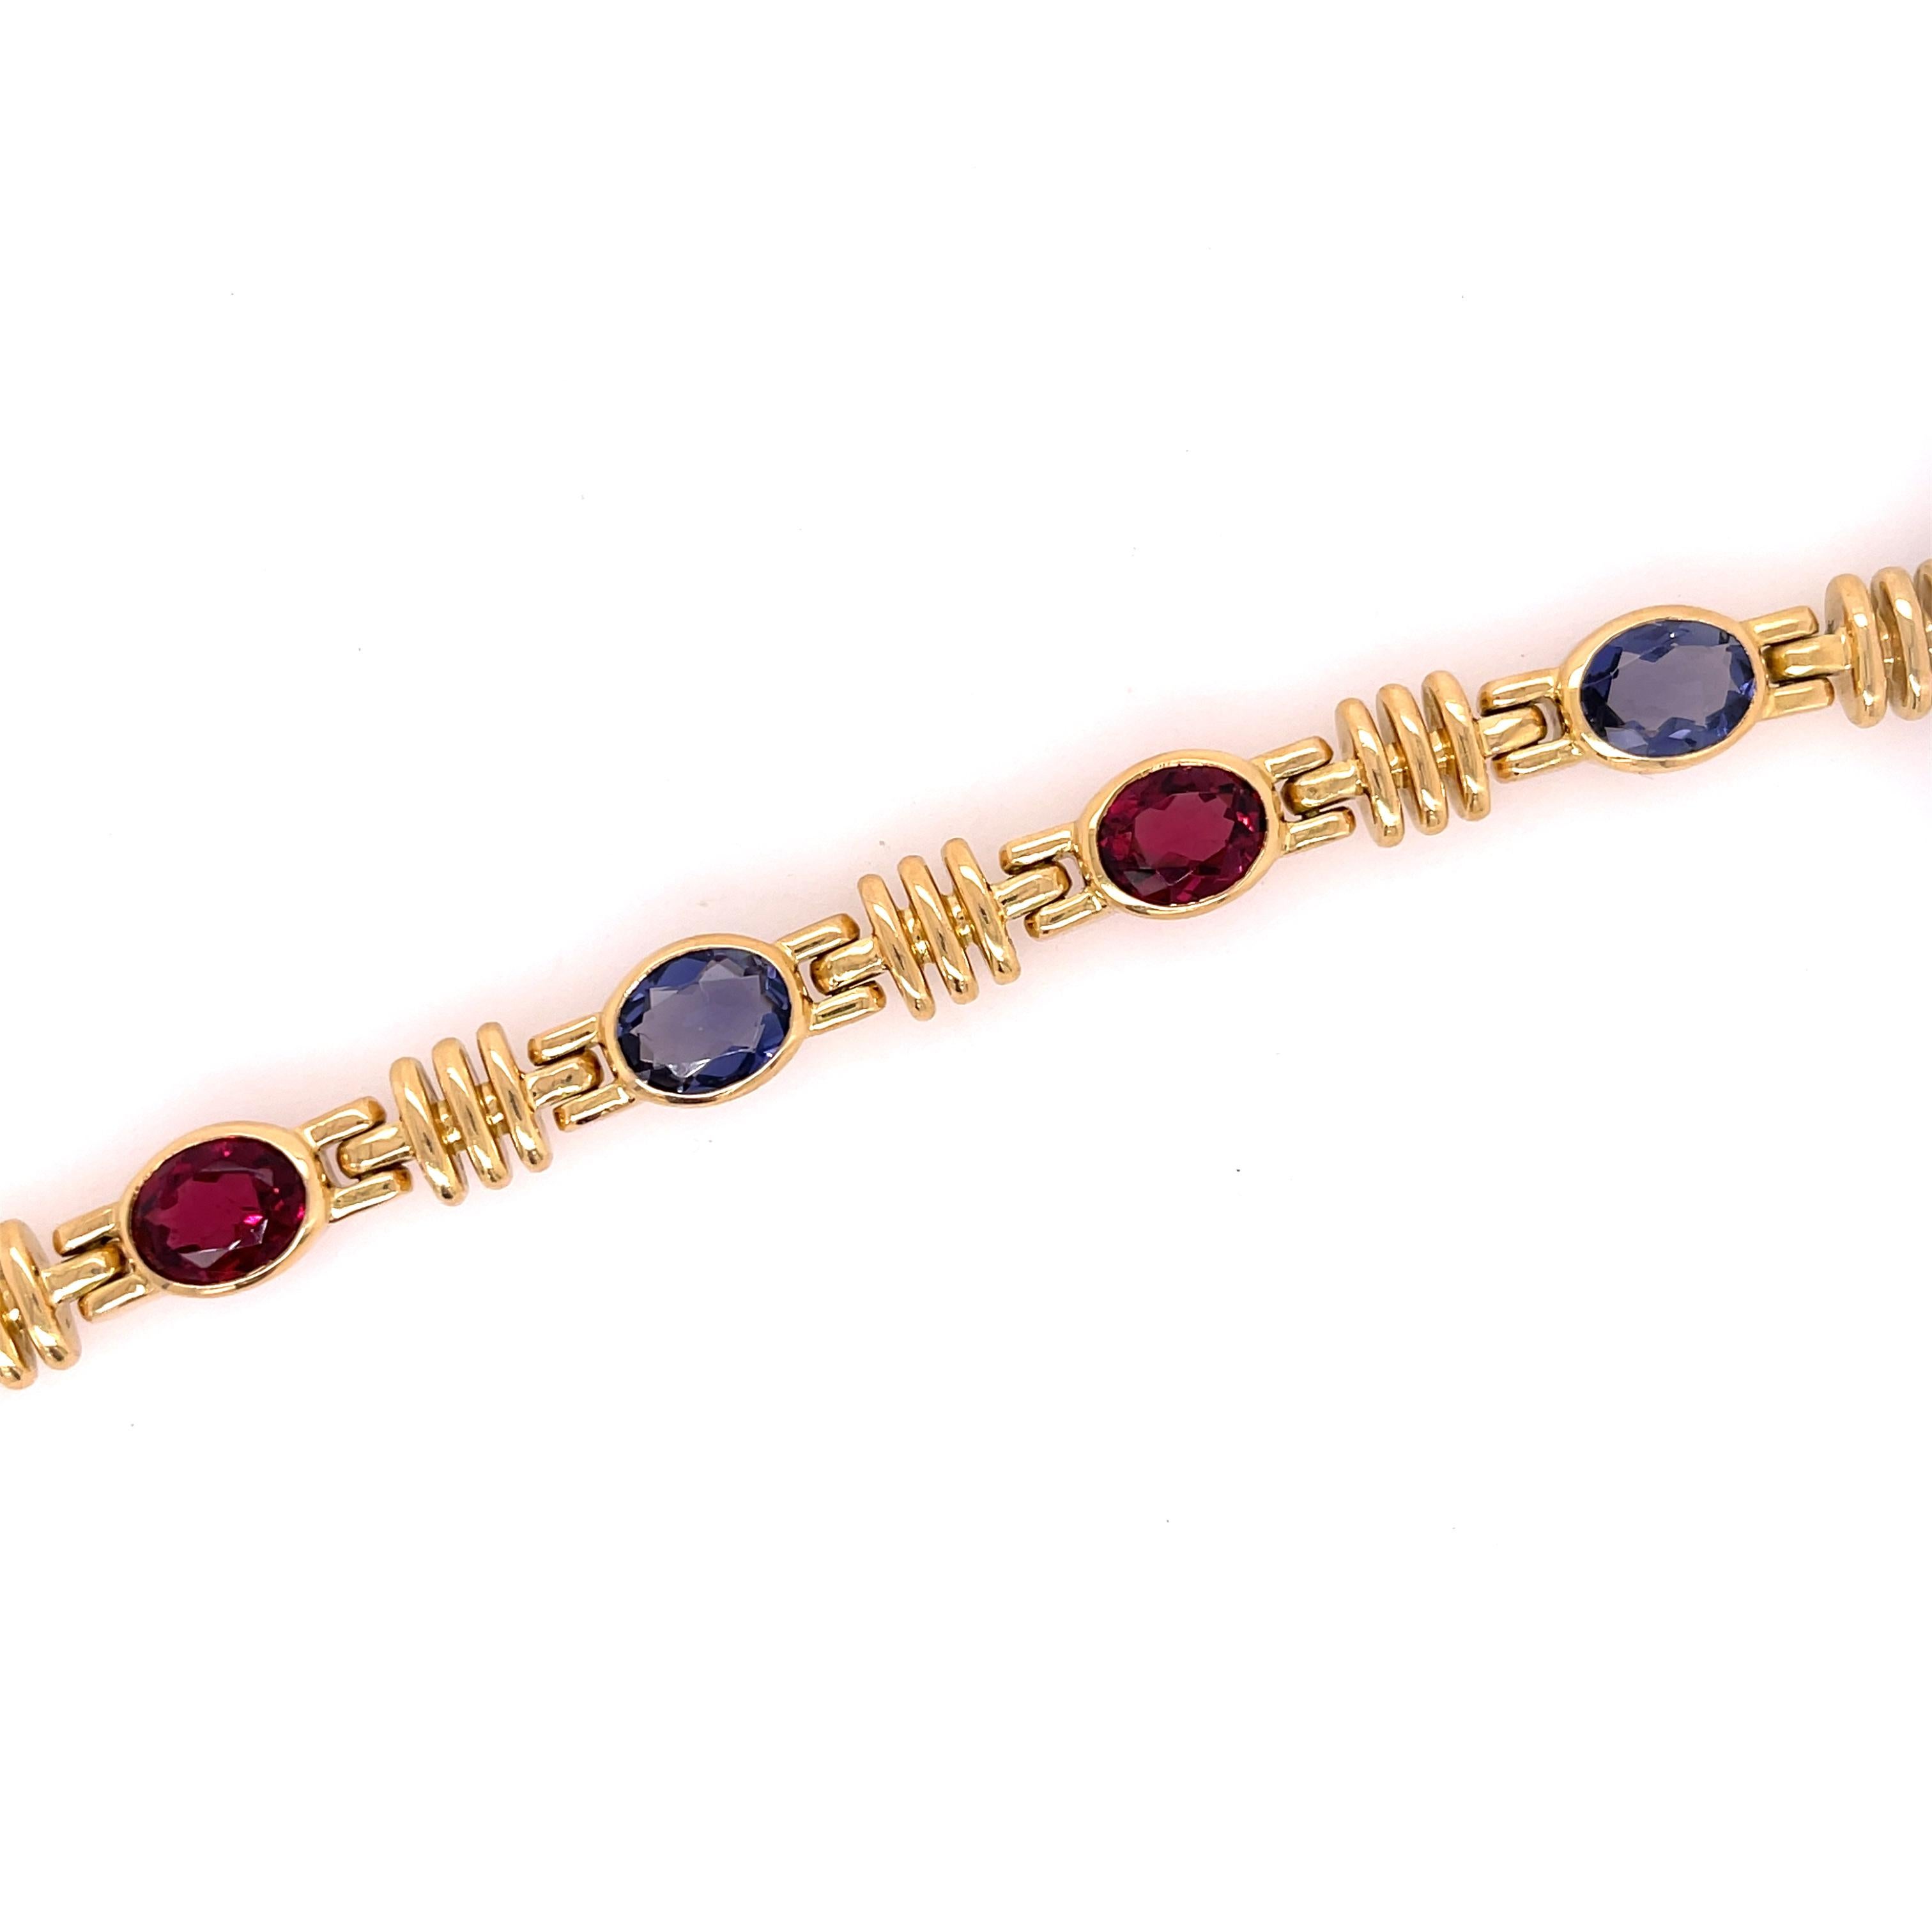 Bulgari Iolite & Pink Tourmaline Bracelet in 18K Yellow Gold. The bracelet features approximately 7 carats of Pink Tourmaline and 3.60 carats of Iolite. 
7